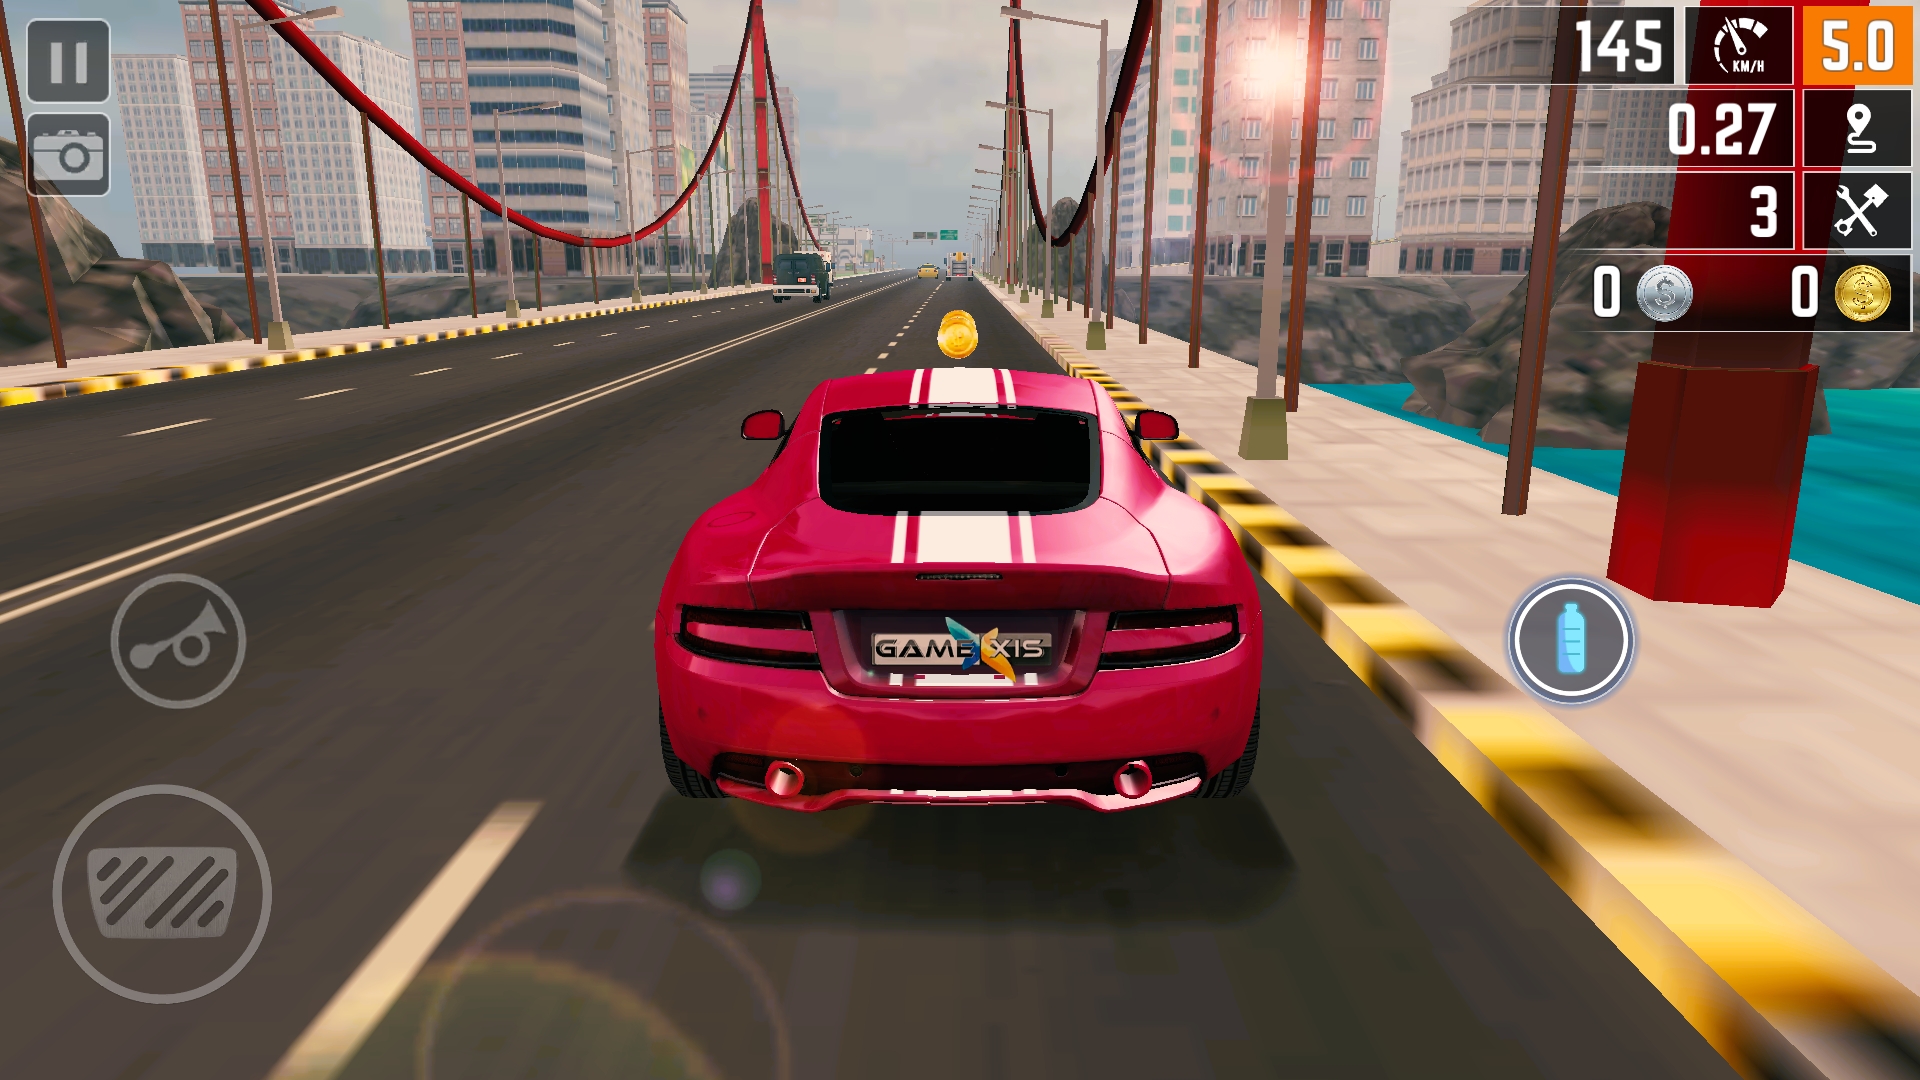 Crazy Car Traffic Racing Games 2020 New Car Games Review